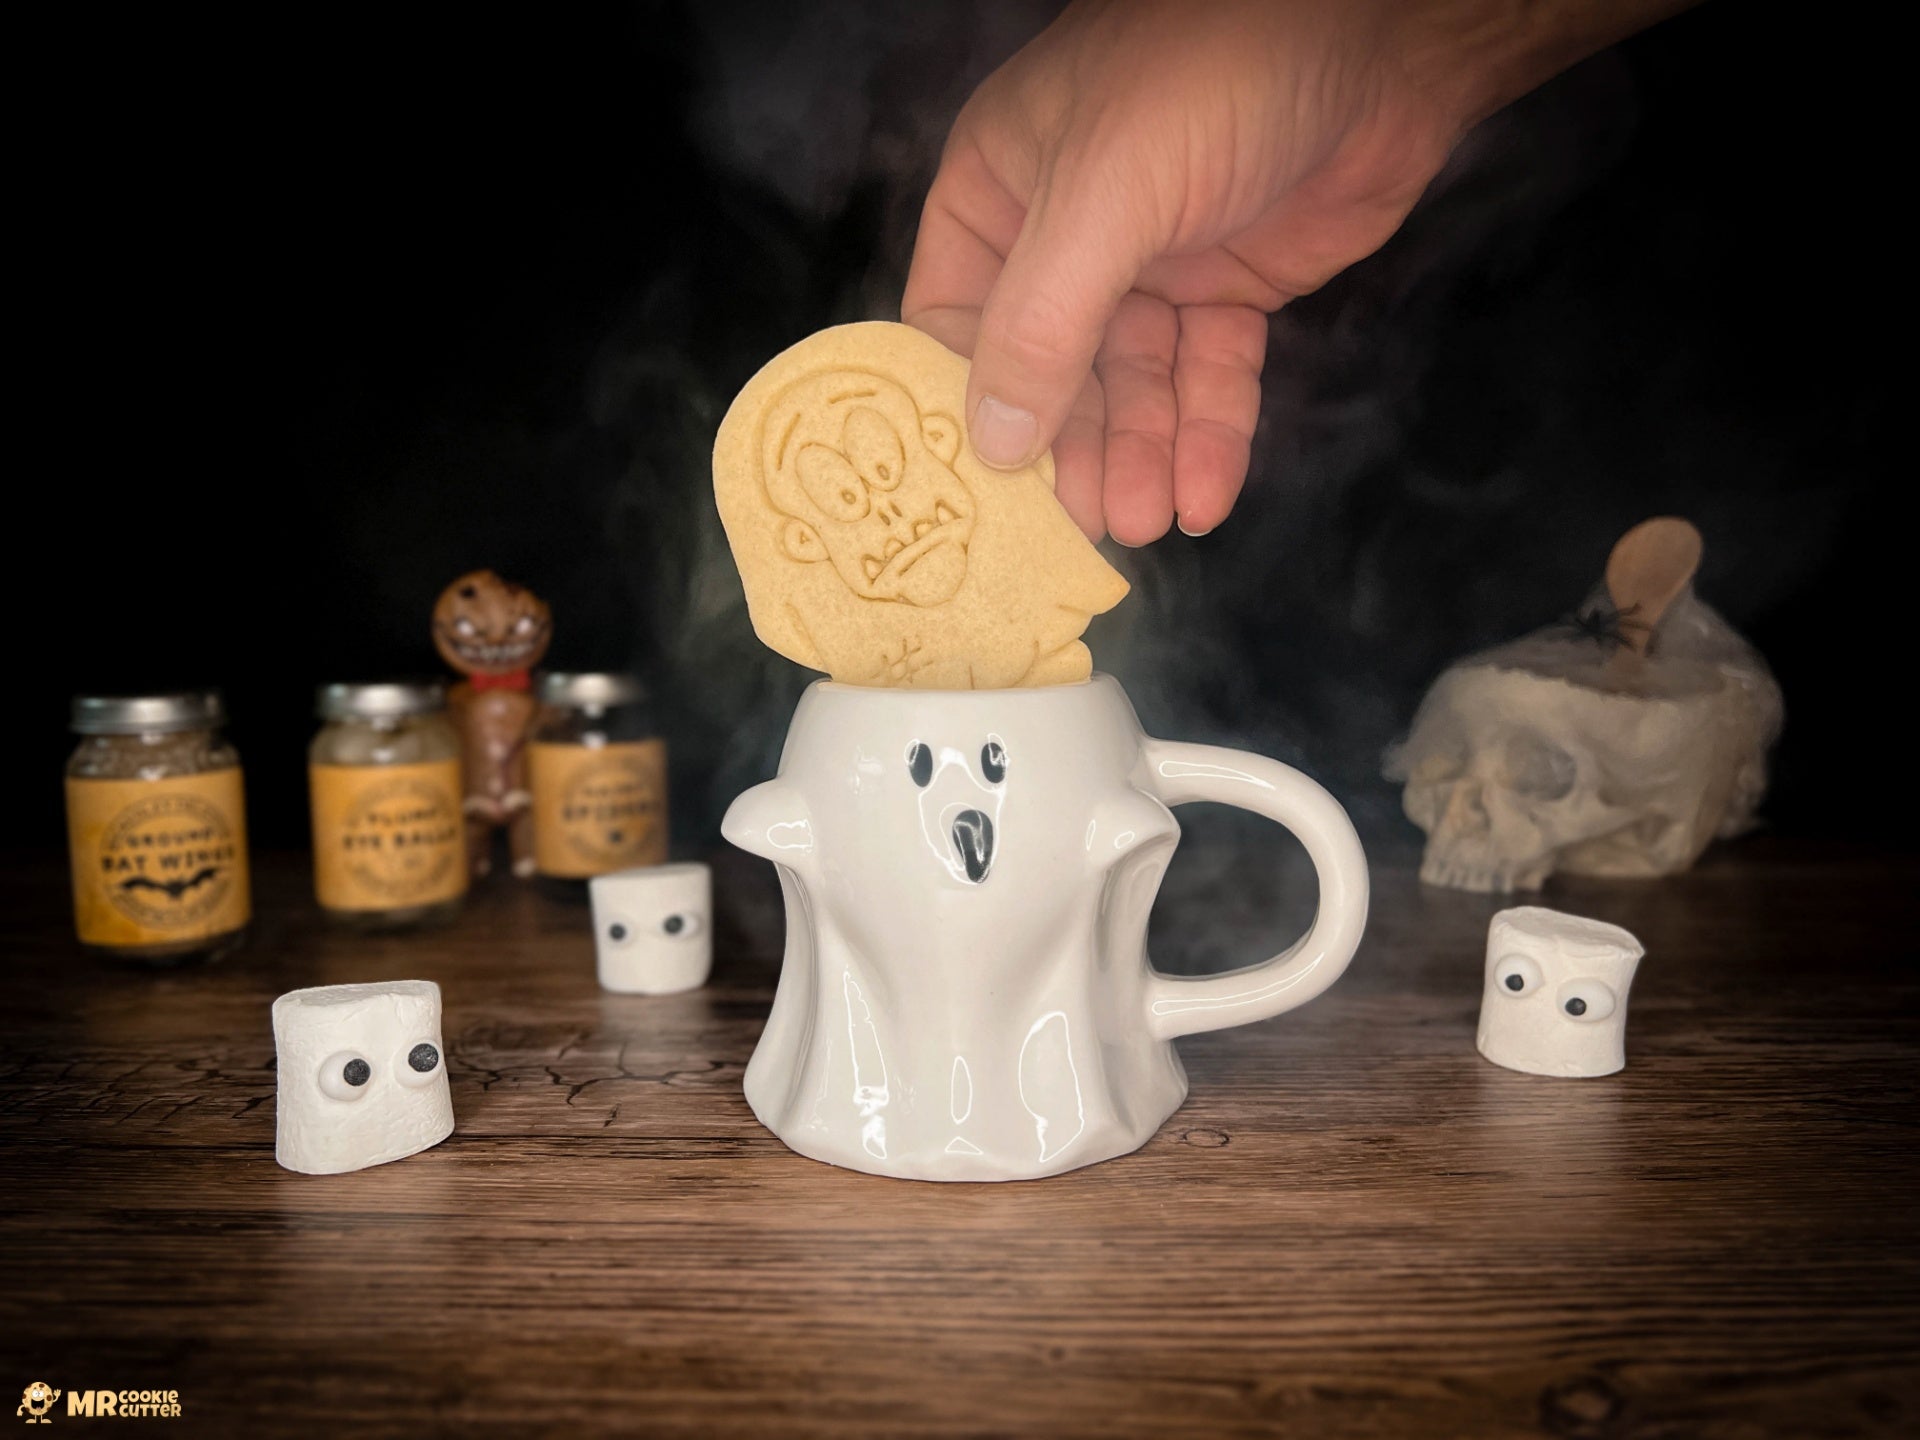 Halloween Ghoul Cookie dipped in a Ghost mug